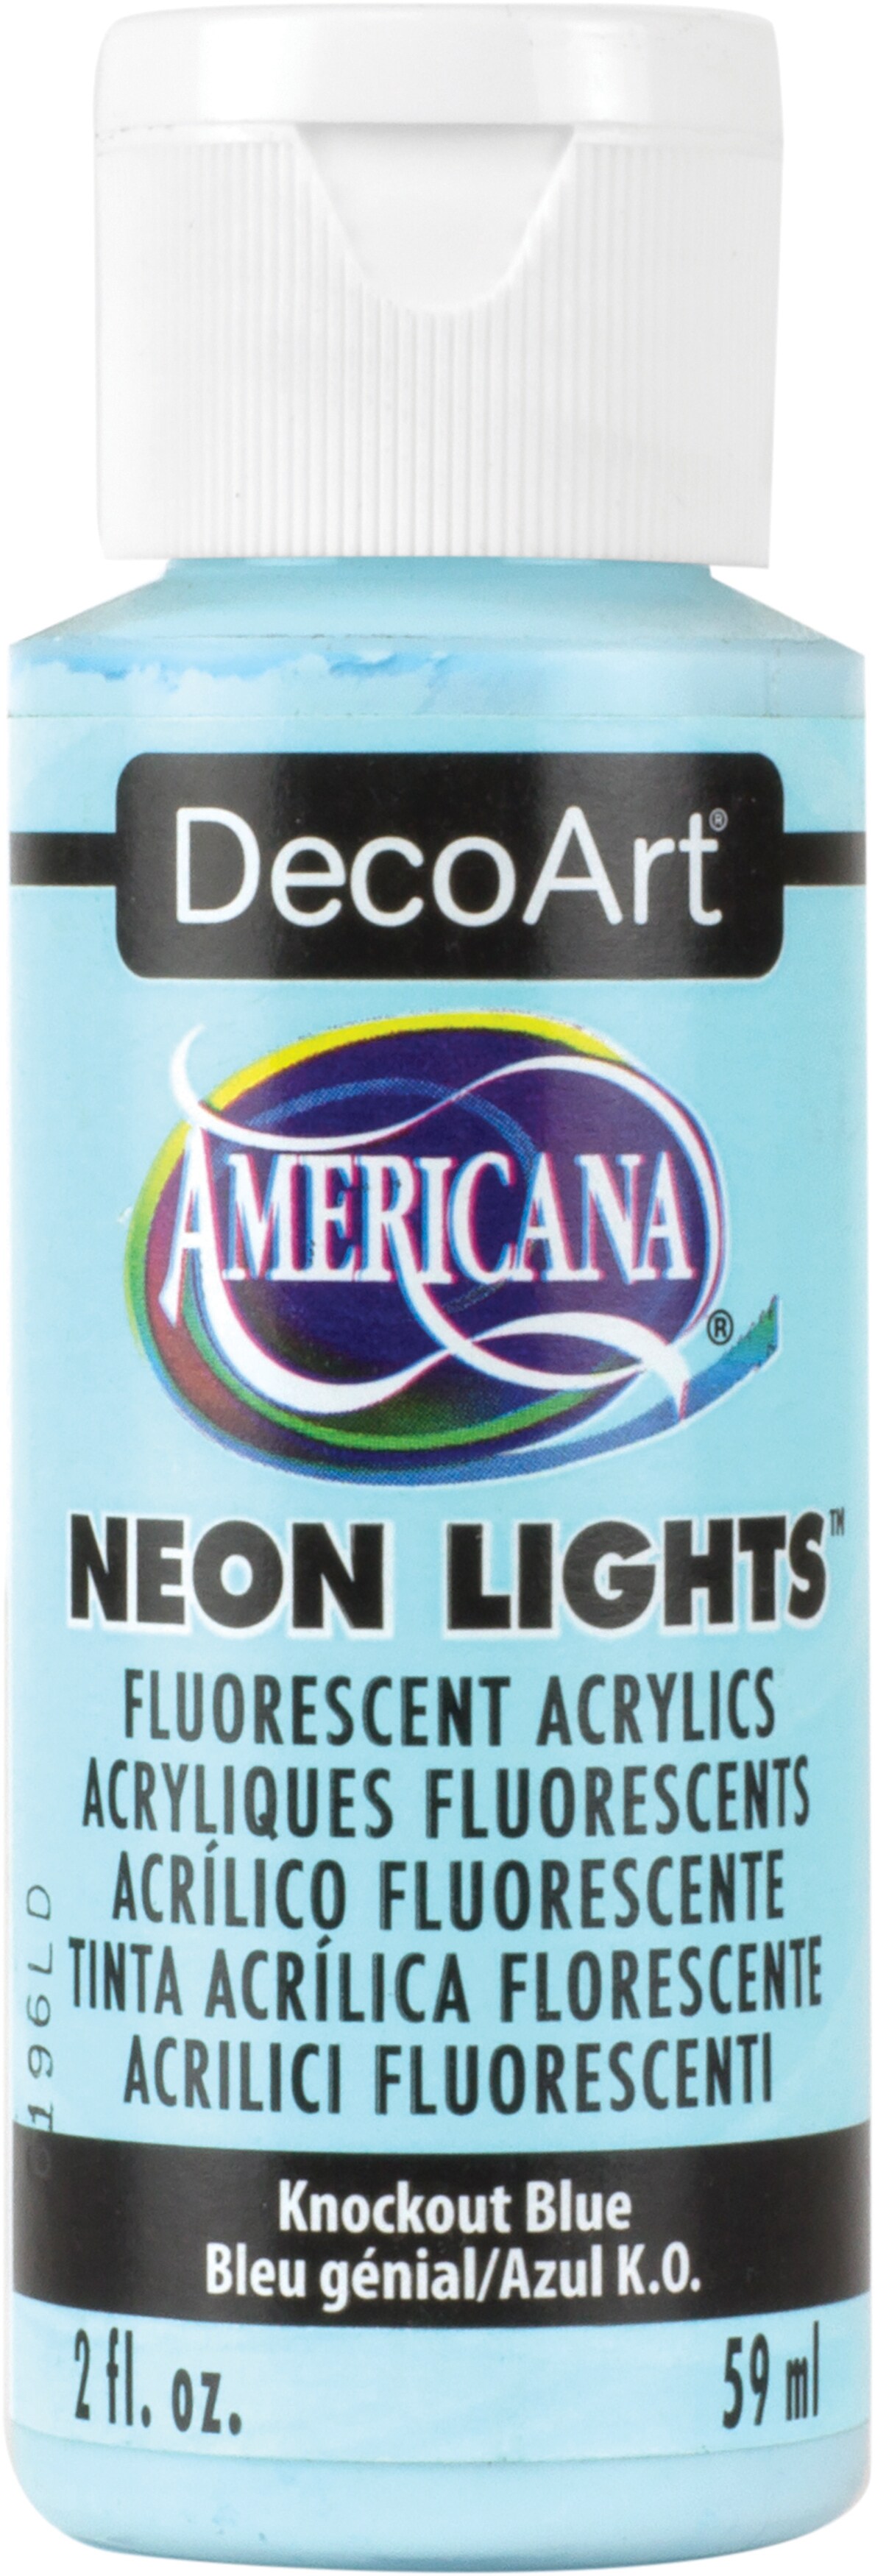 Americana Neons - DecoArt Acrylic Paint and Art Supplies